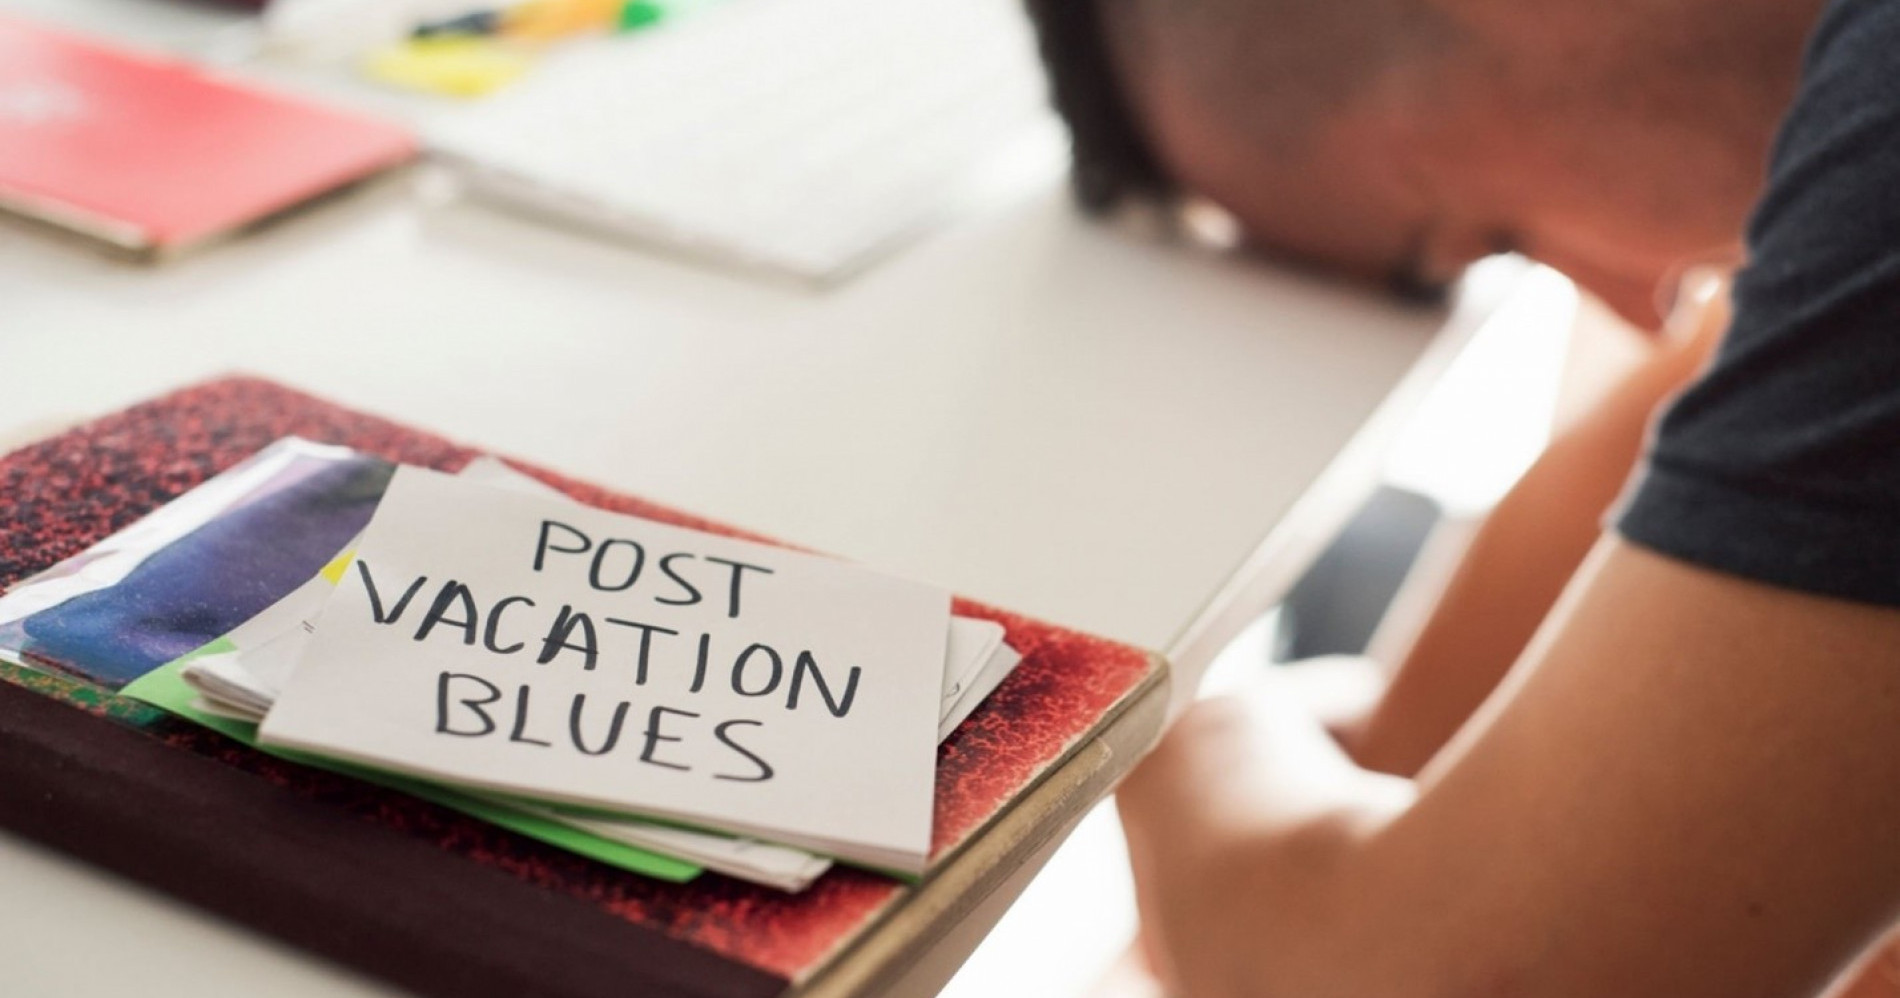 Post-Vacation Blues dirasakan oleh banyak orang (Sumber Gambar: AdobeStock)